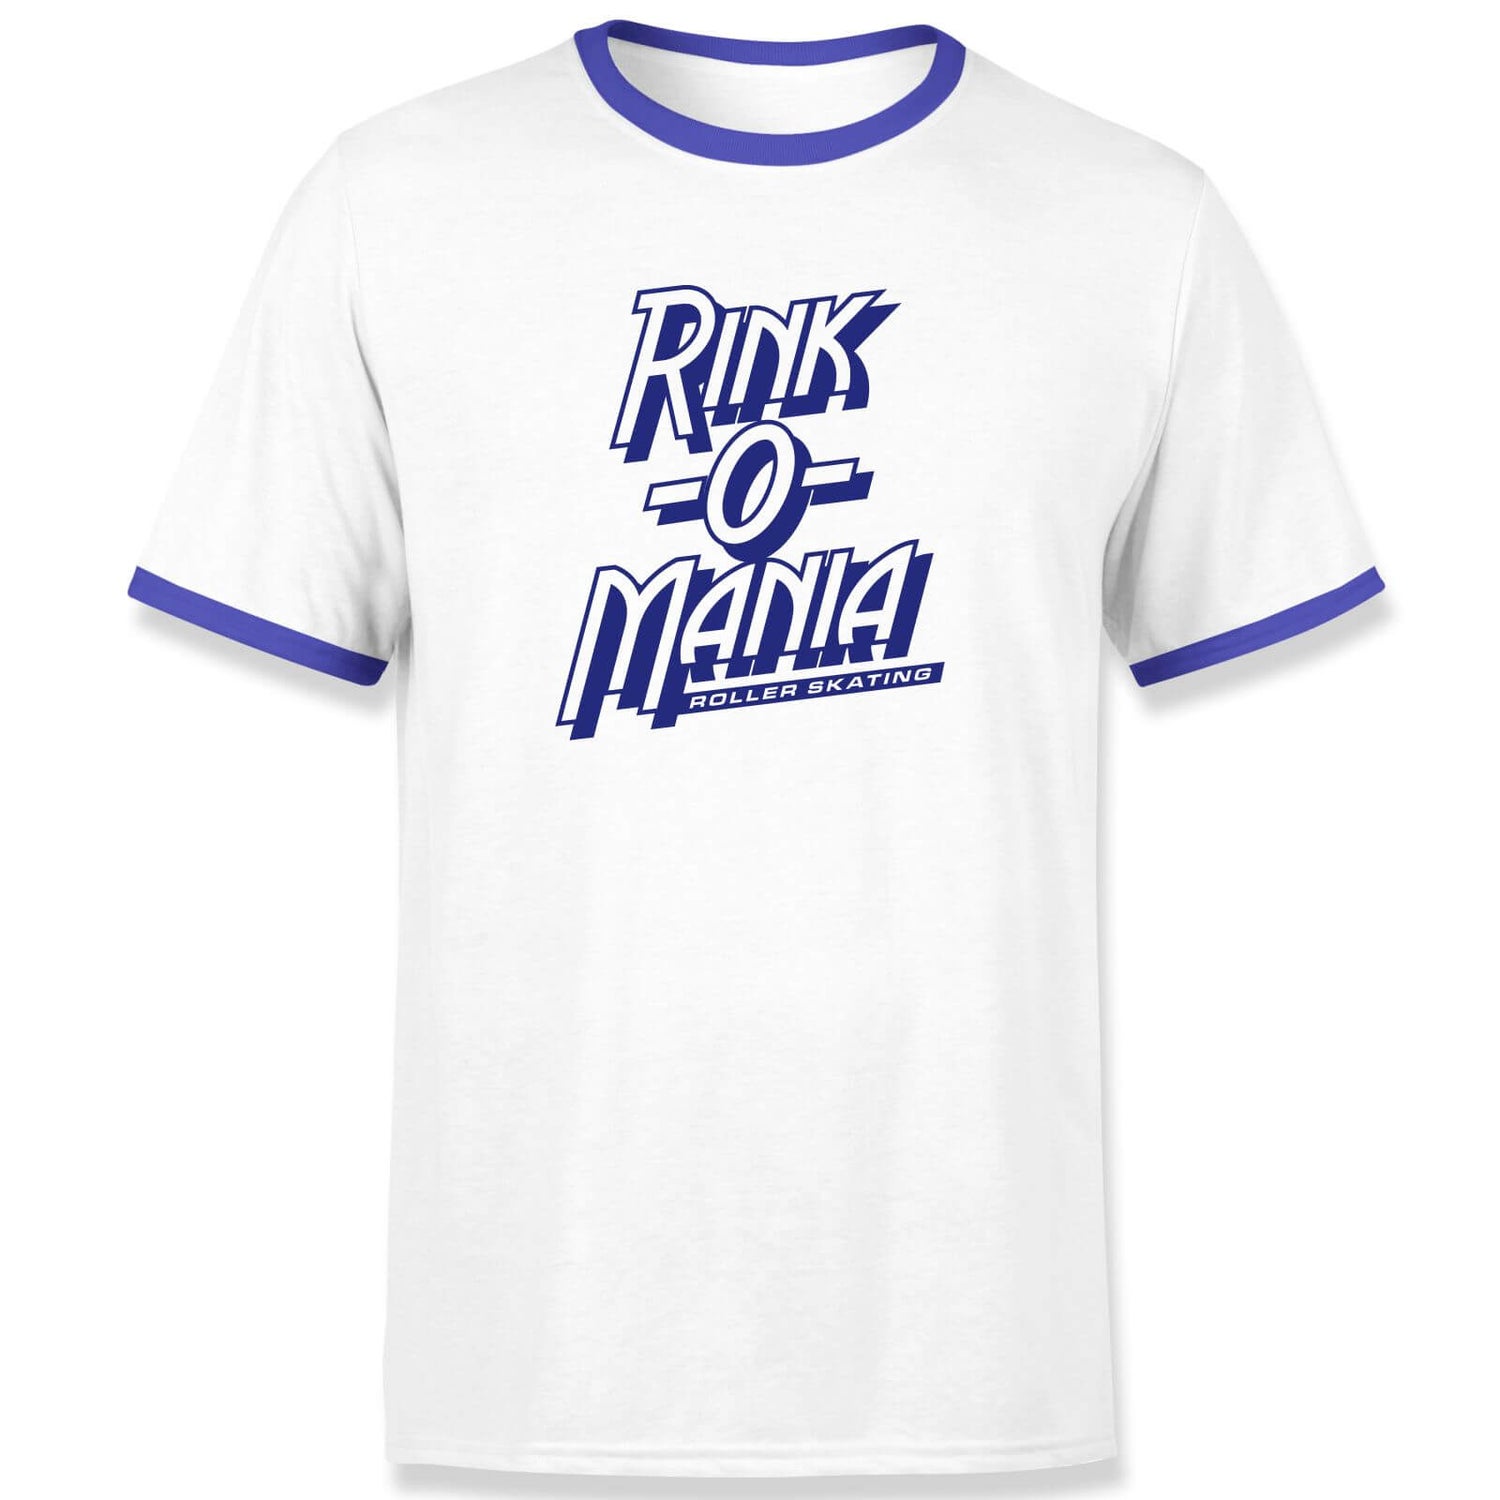 Stranger Things Rink-O-Mania Unisex Ringer T-shirt - Wit/Blauw - S - Wit